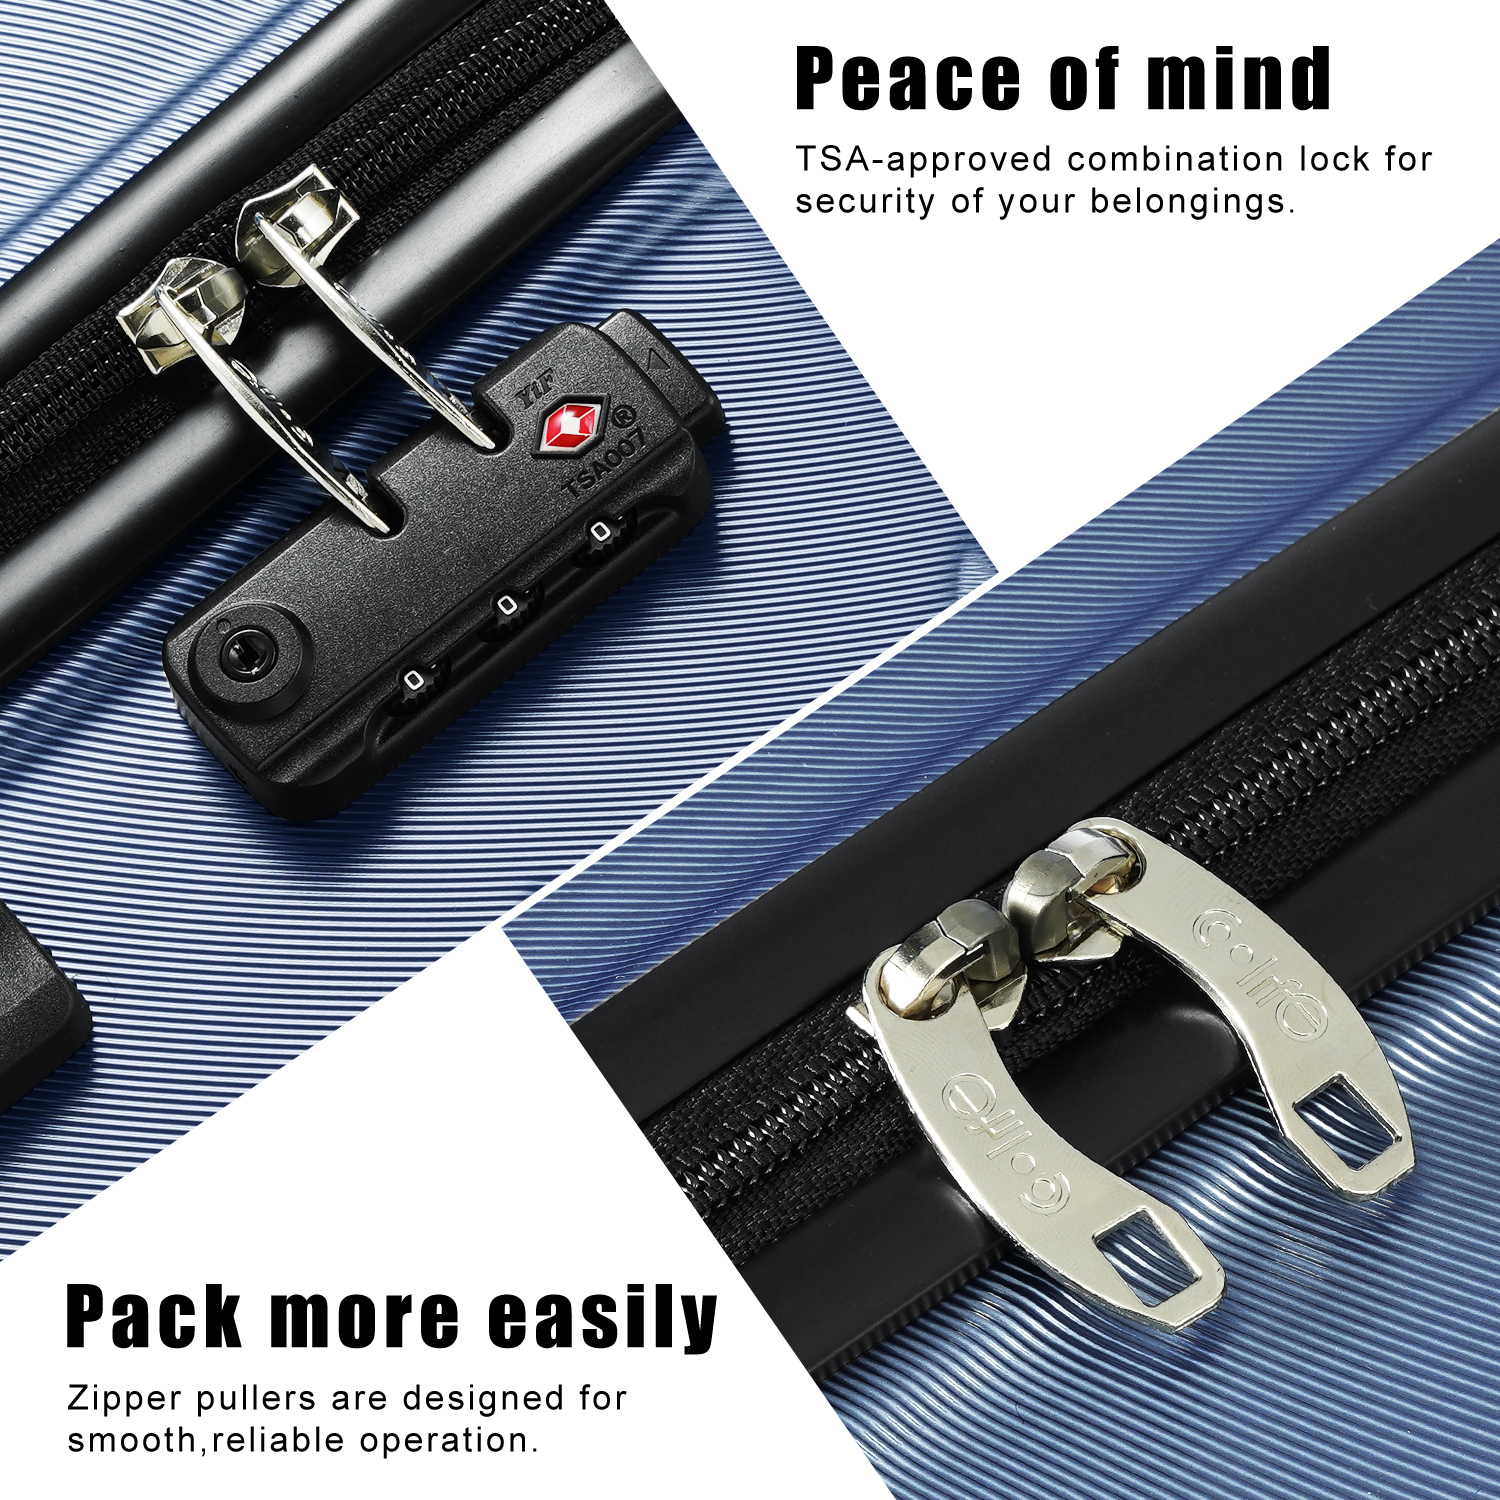 Coolife Suitcase Carry-on Spinner TSA Lock USB Port Expandable Luggage